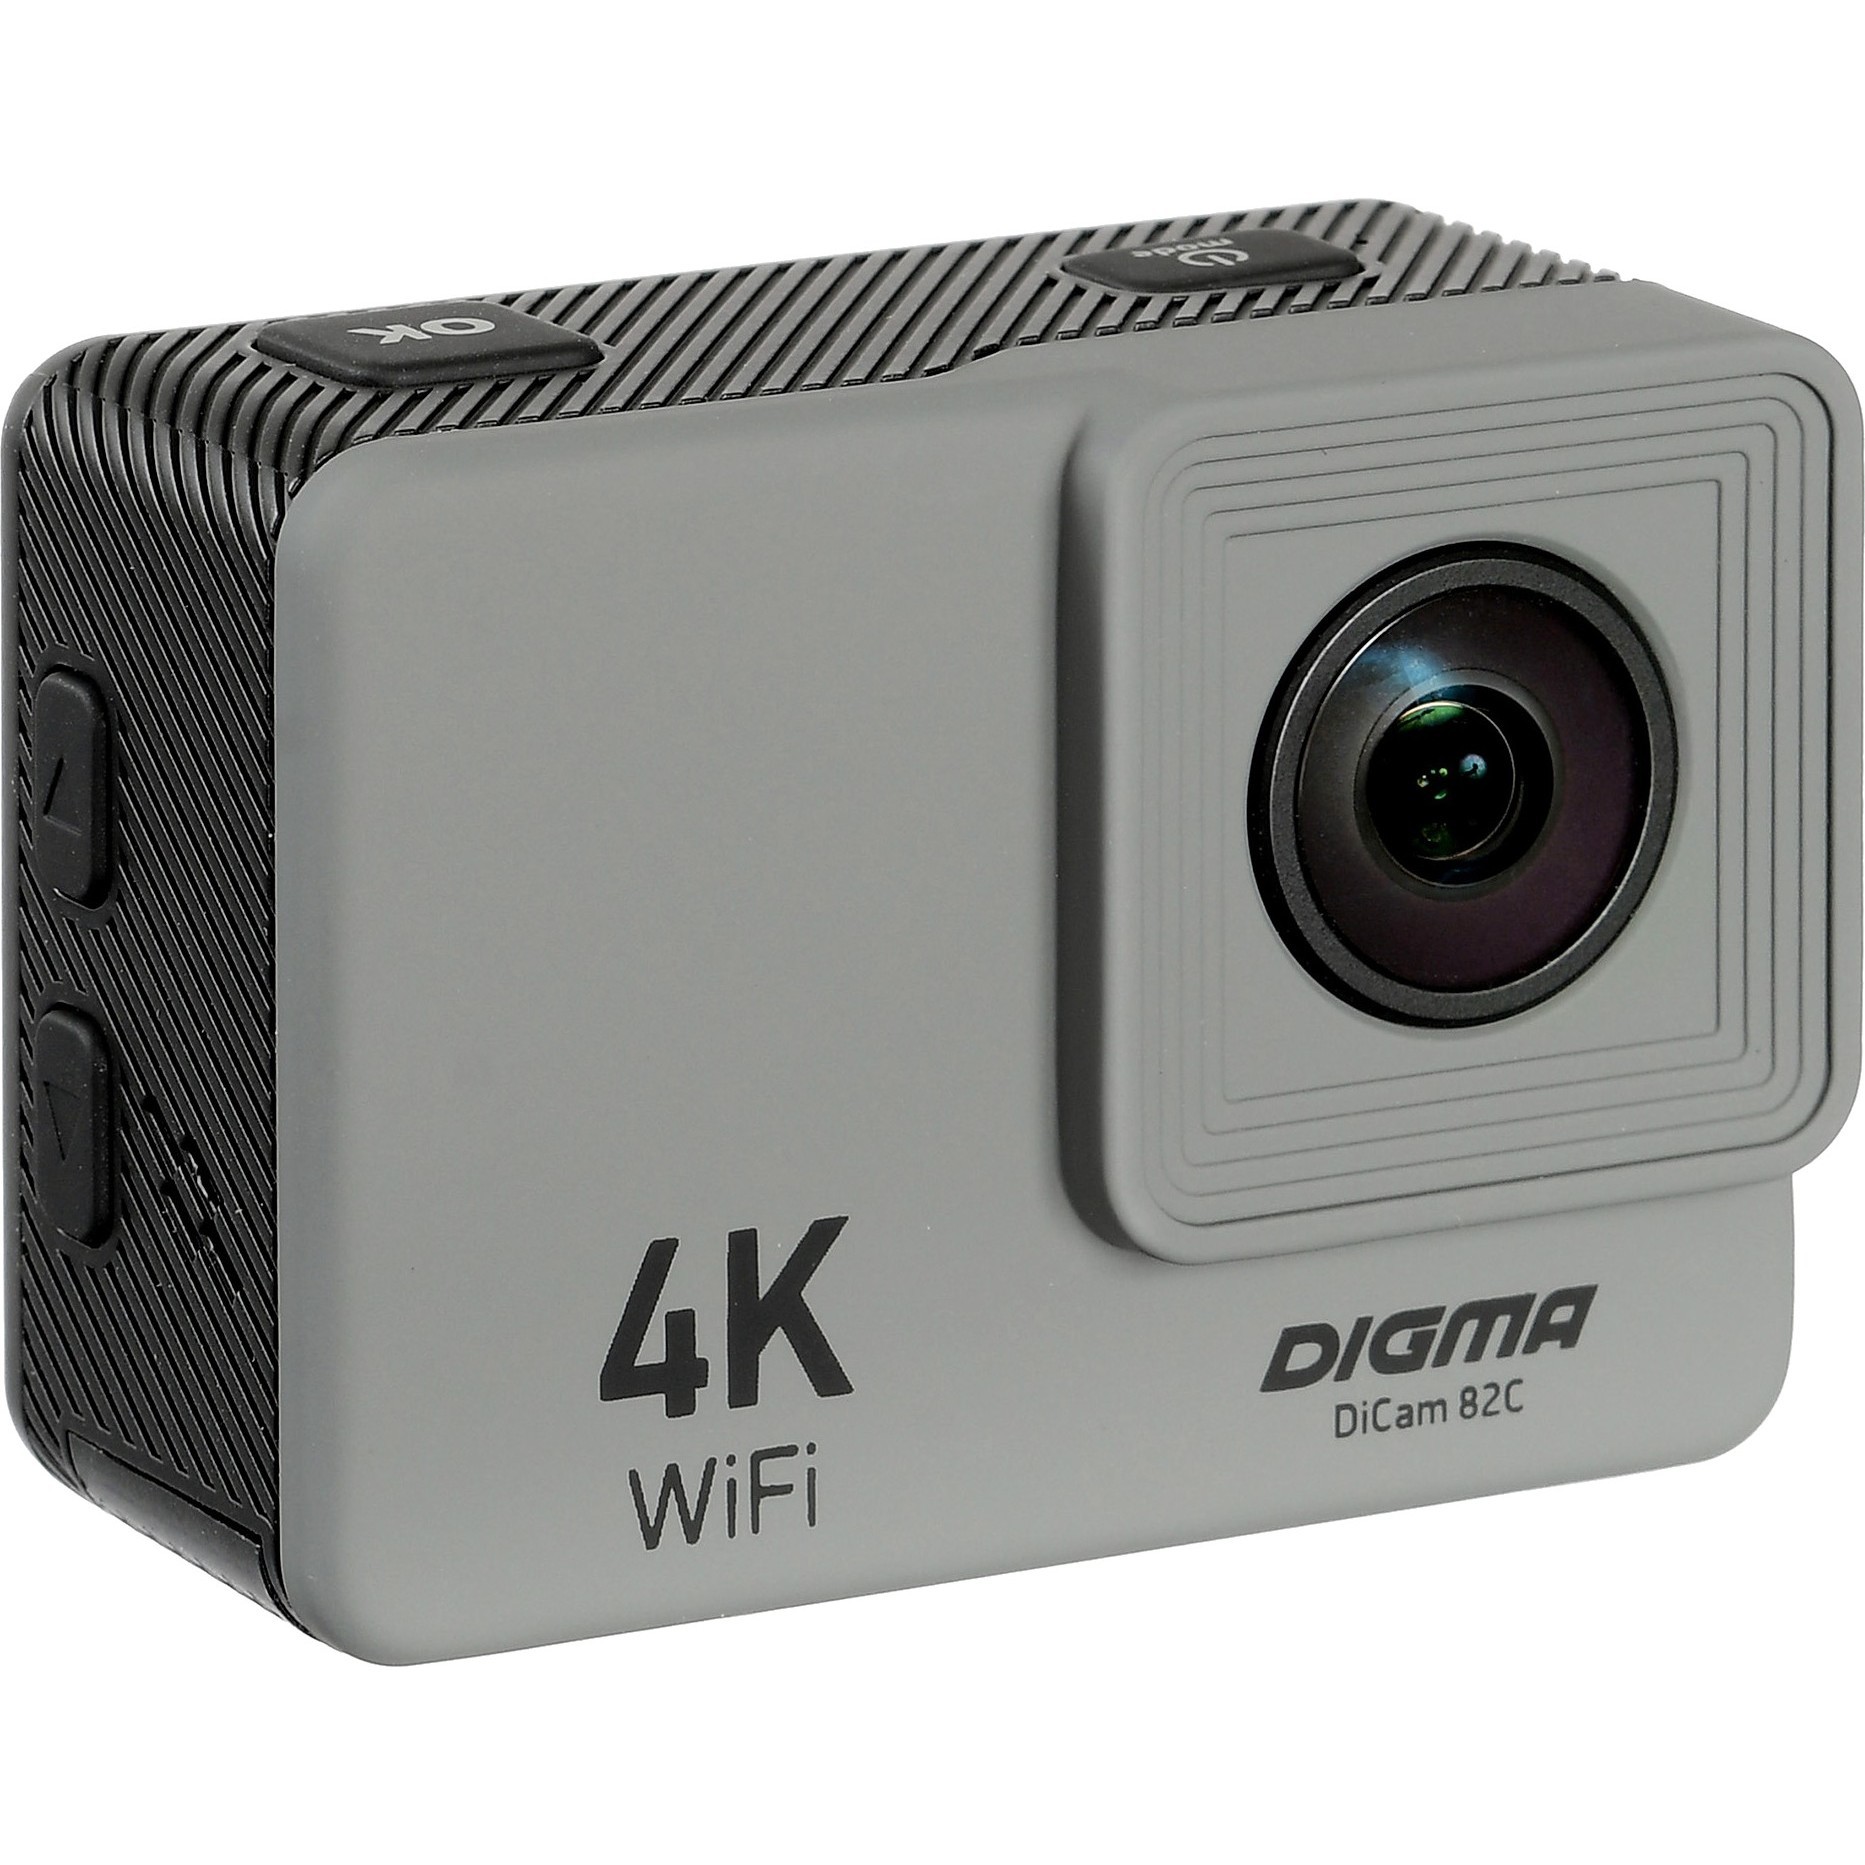 Dicam 790. DICAM 82c 4k Wi Fi. Экшн-камеры Digma DICAM 520 4k, WIFI.. Digma камера 4k. Экшн камера Дигма 800.